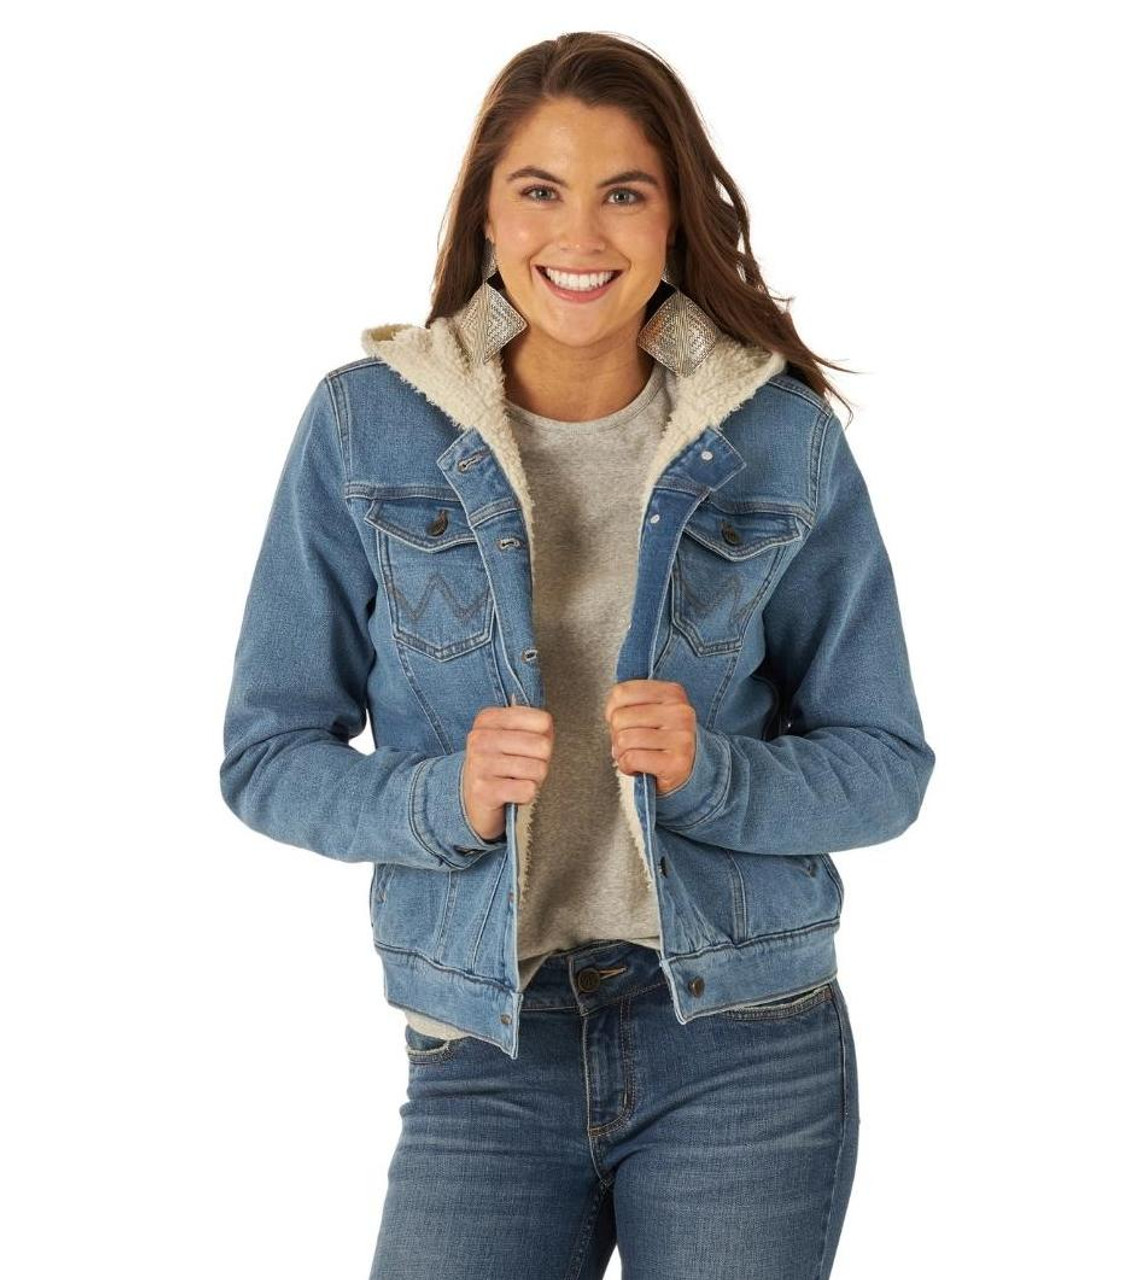 Buy AKAR Sleeveless Washed Women Denim Jacket (Light Blue, L) at Amazon.in